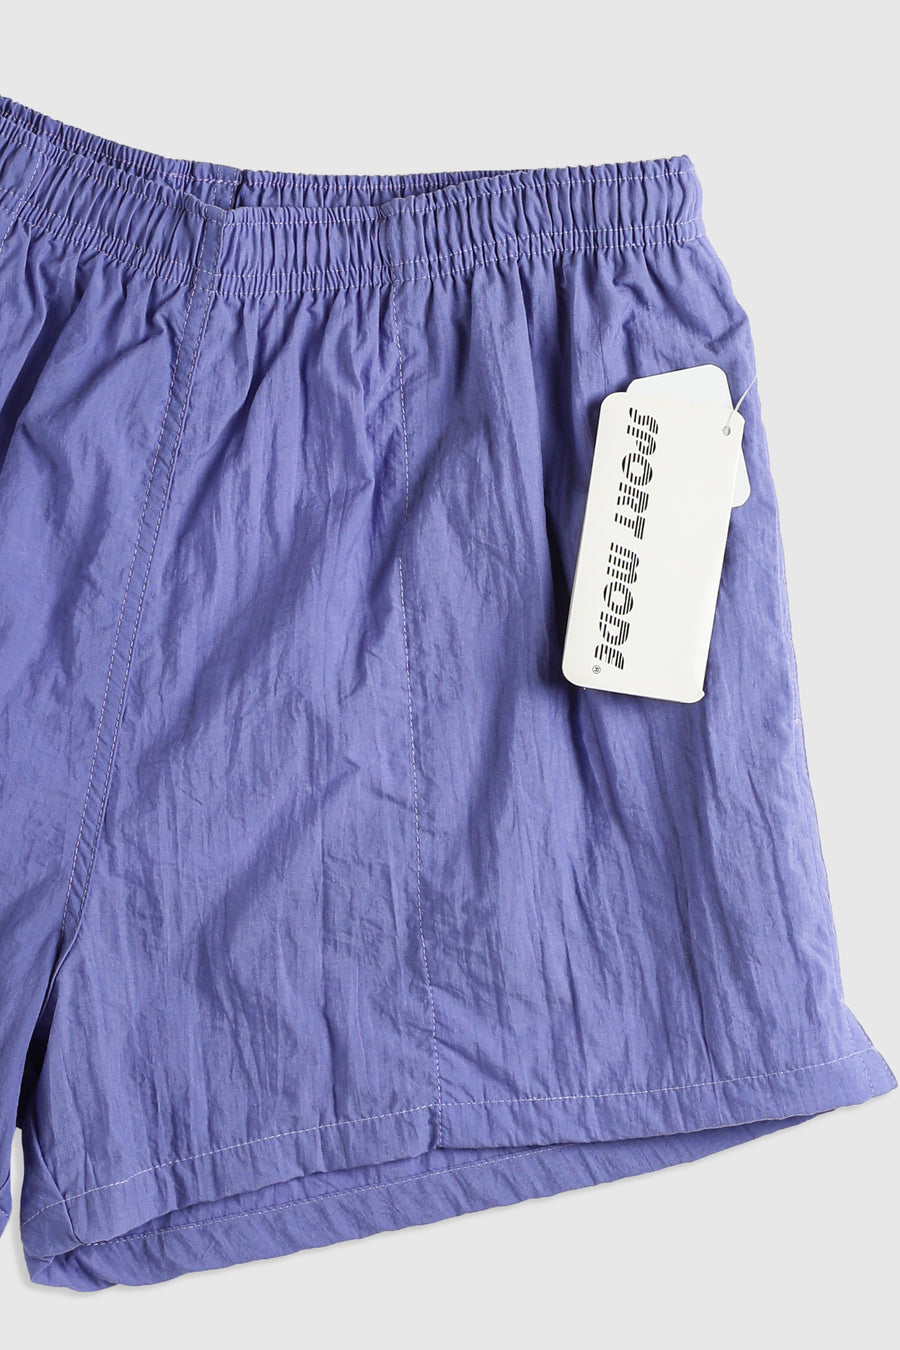 Deadstock Sport Mode Nylon Shorts - Purple, Neon Yellow, Orange, Pink, Black